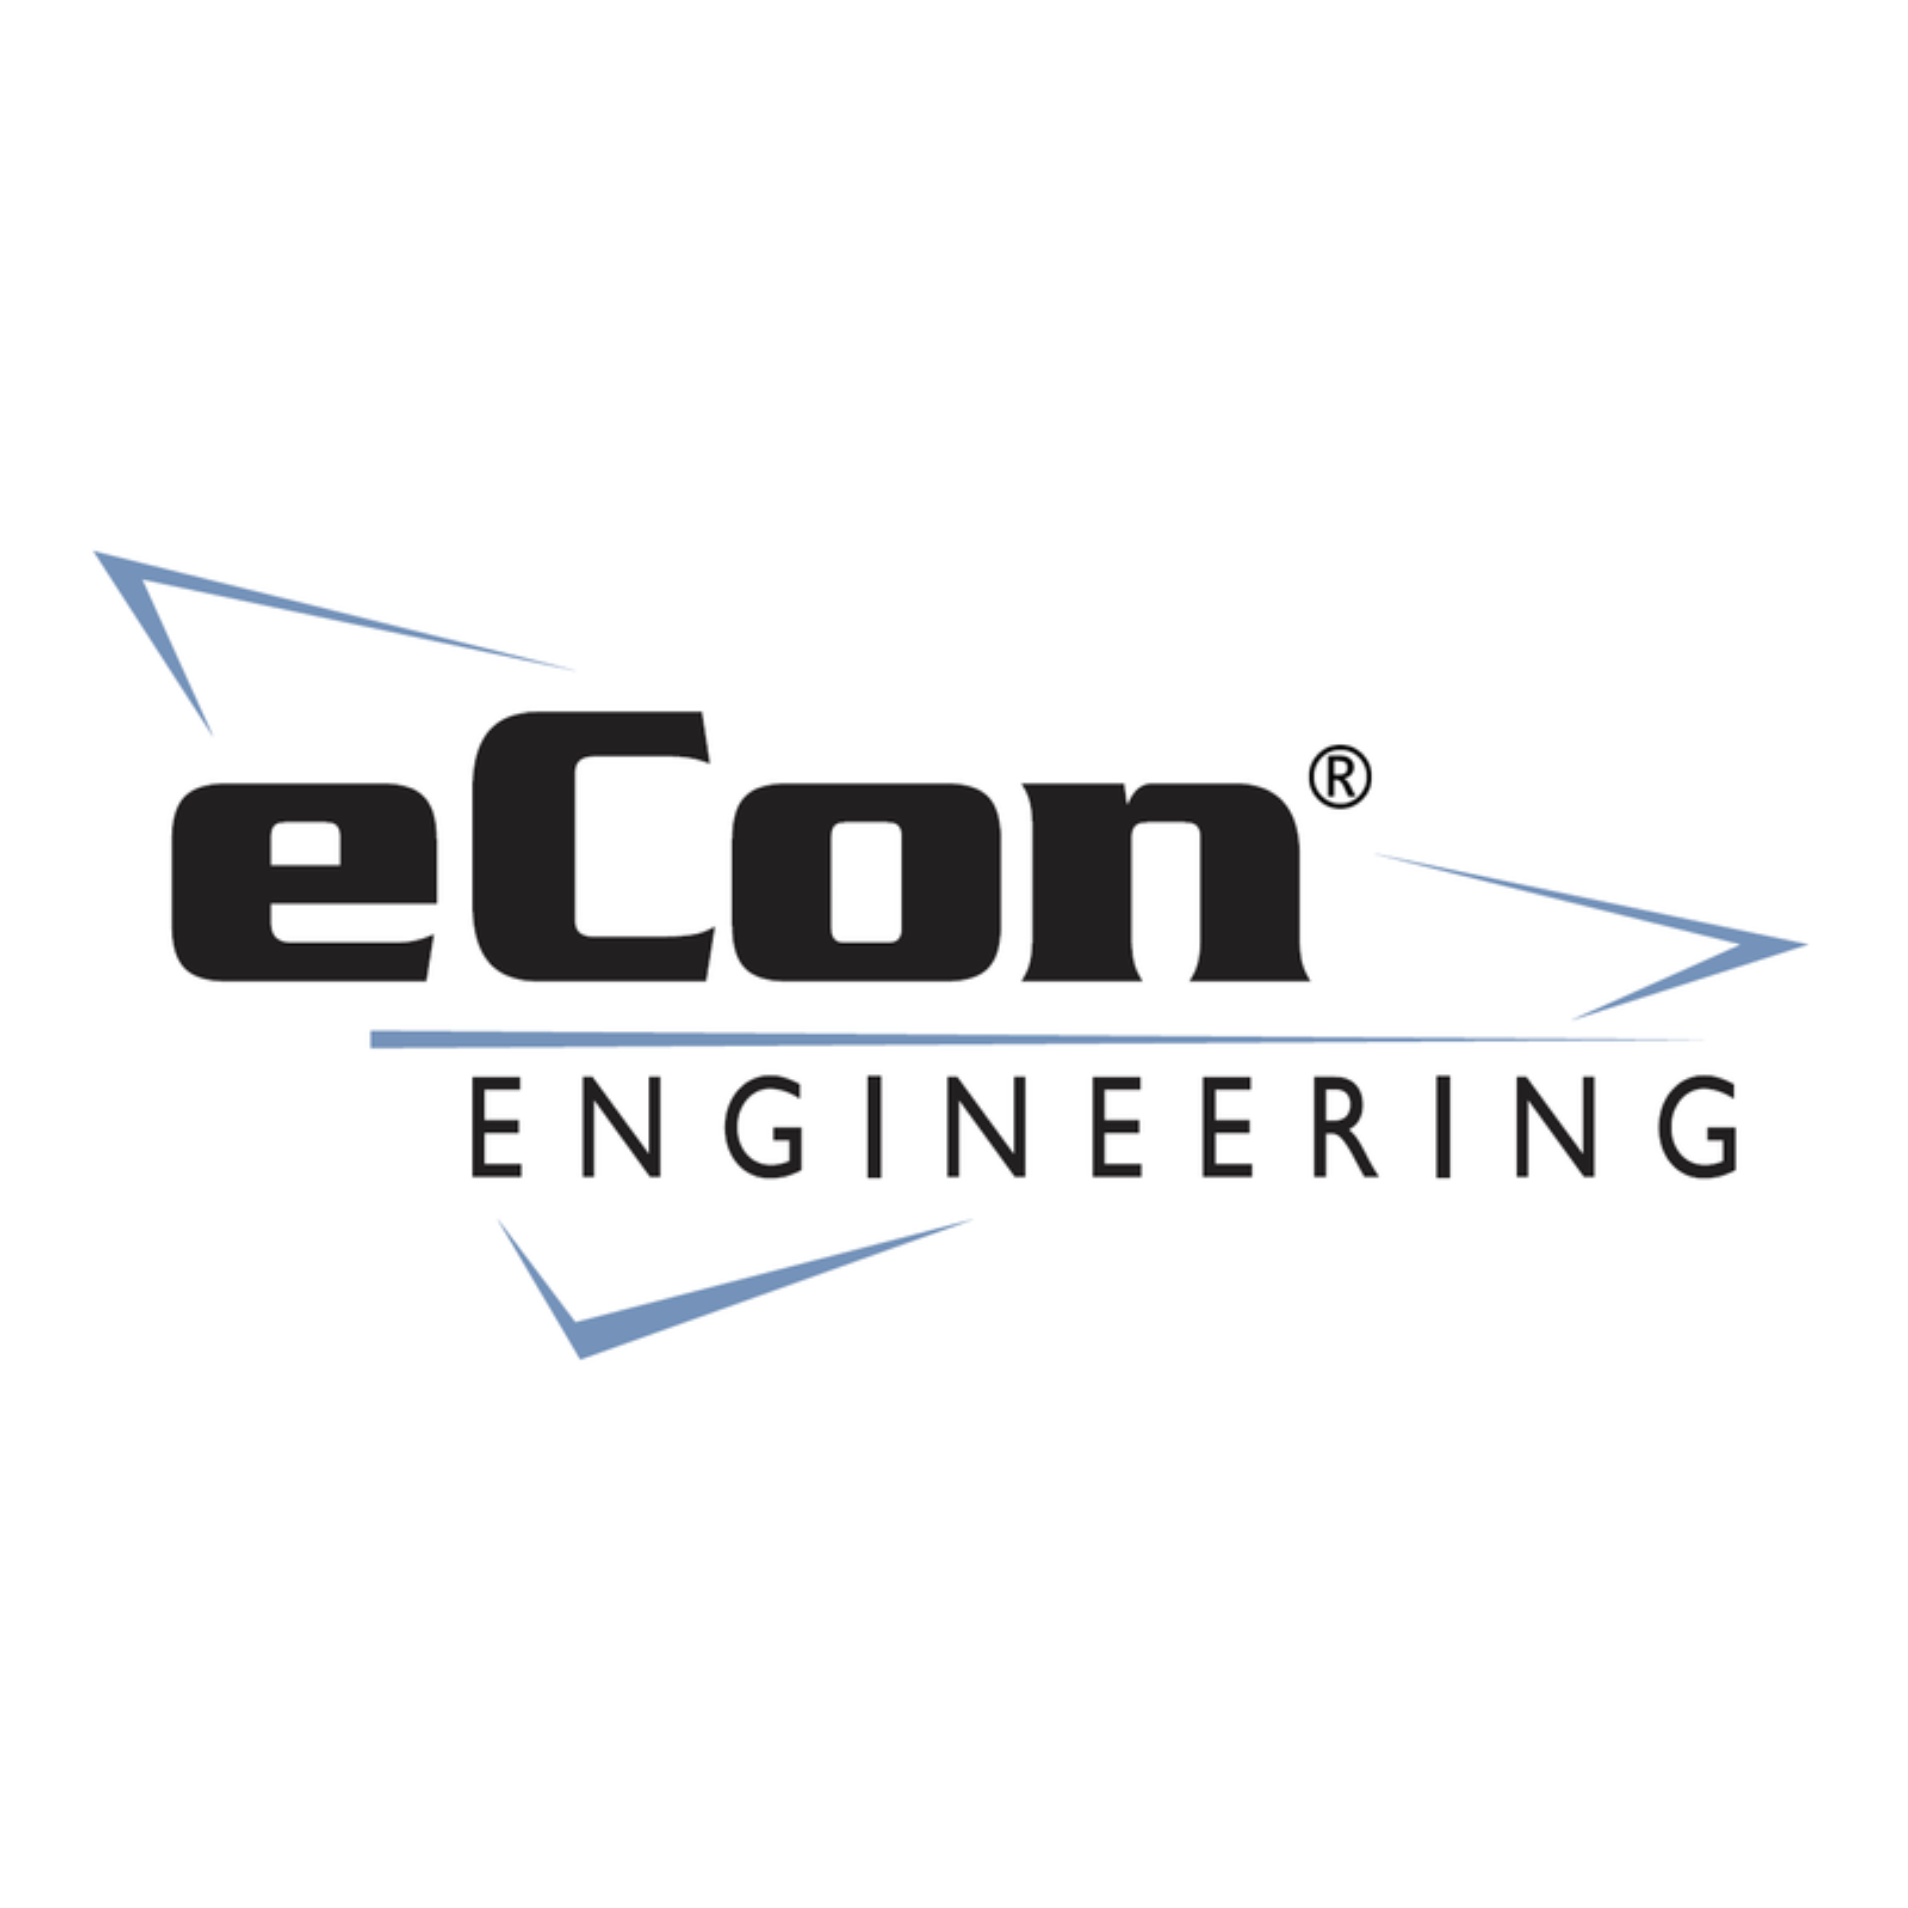 eCon Engineering